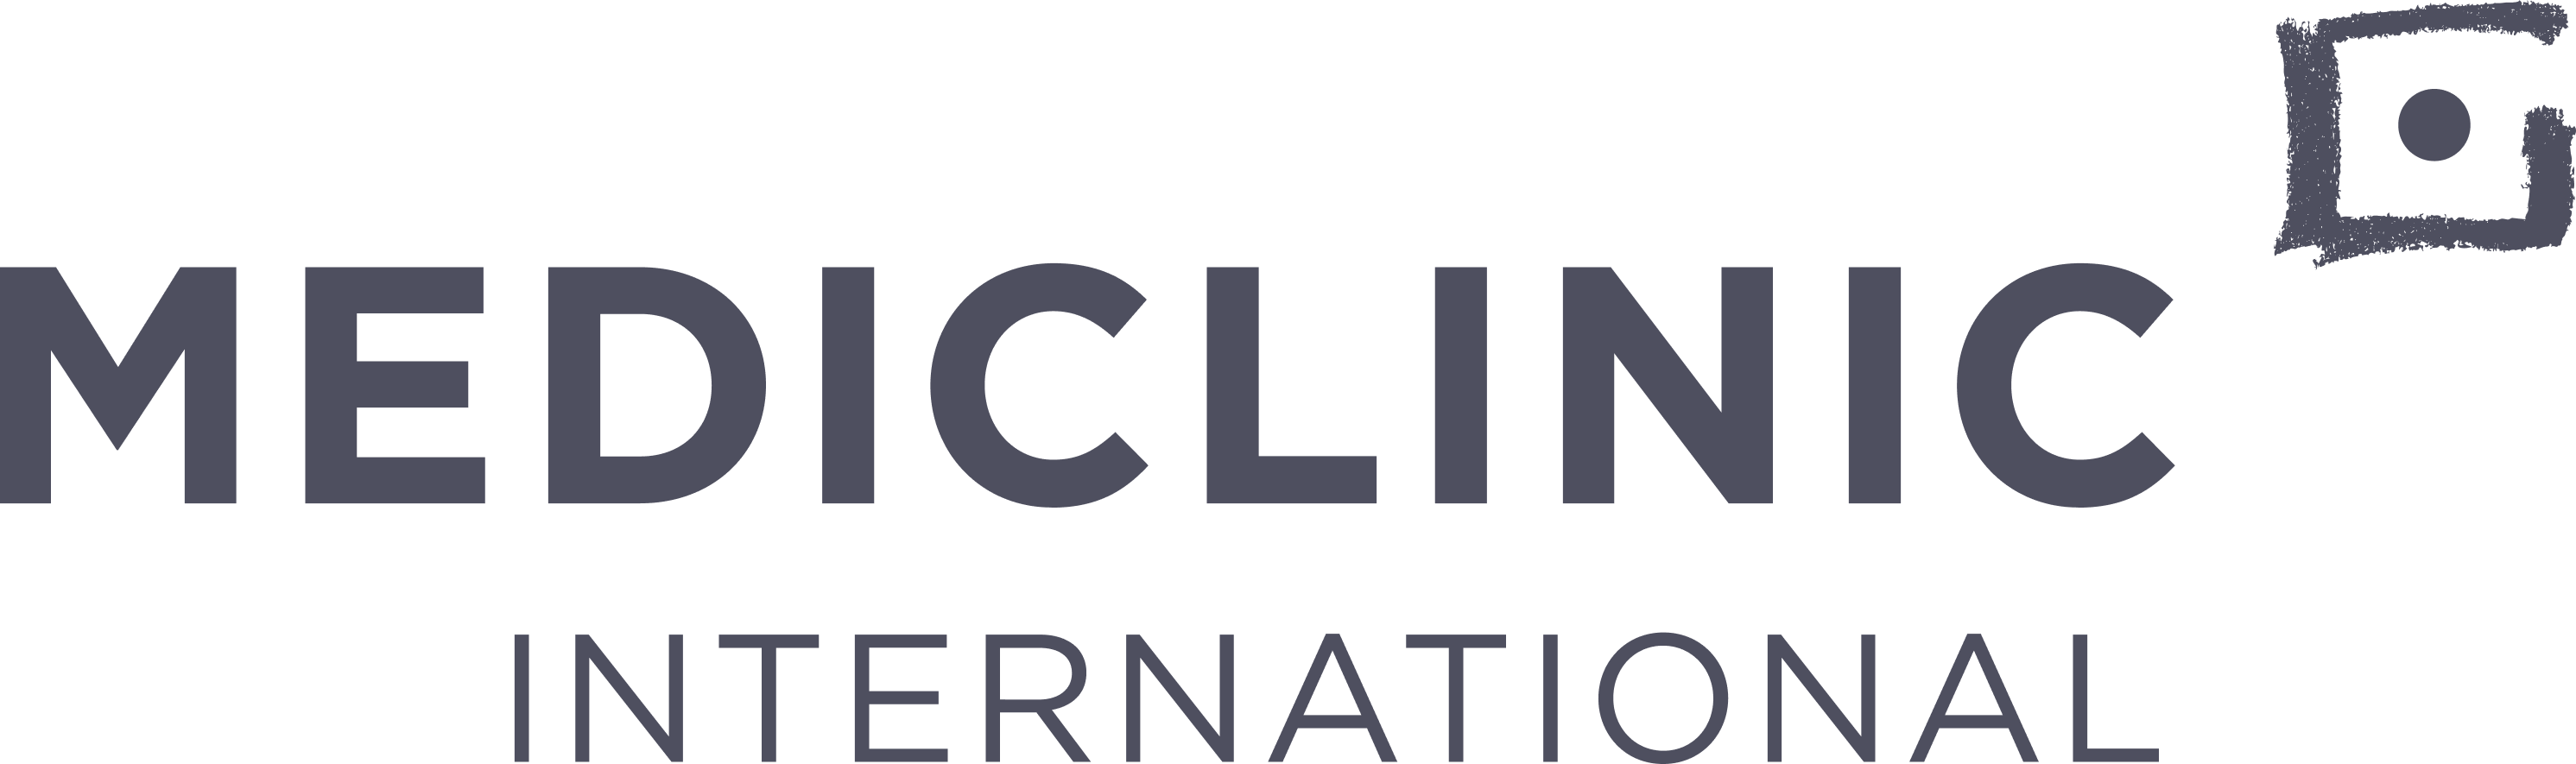 logo-mediclinic-grey.png